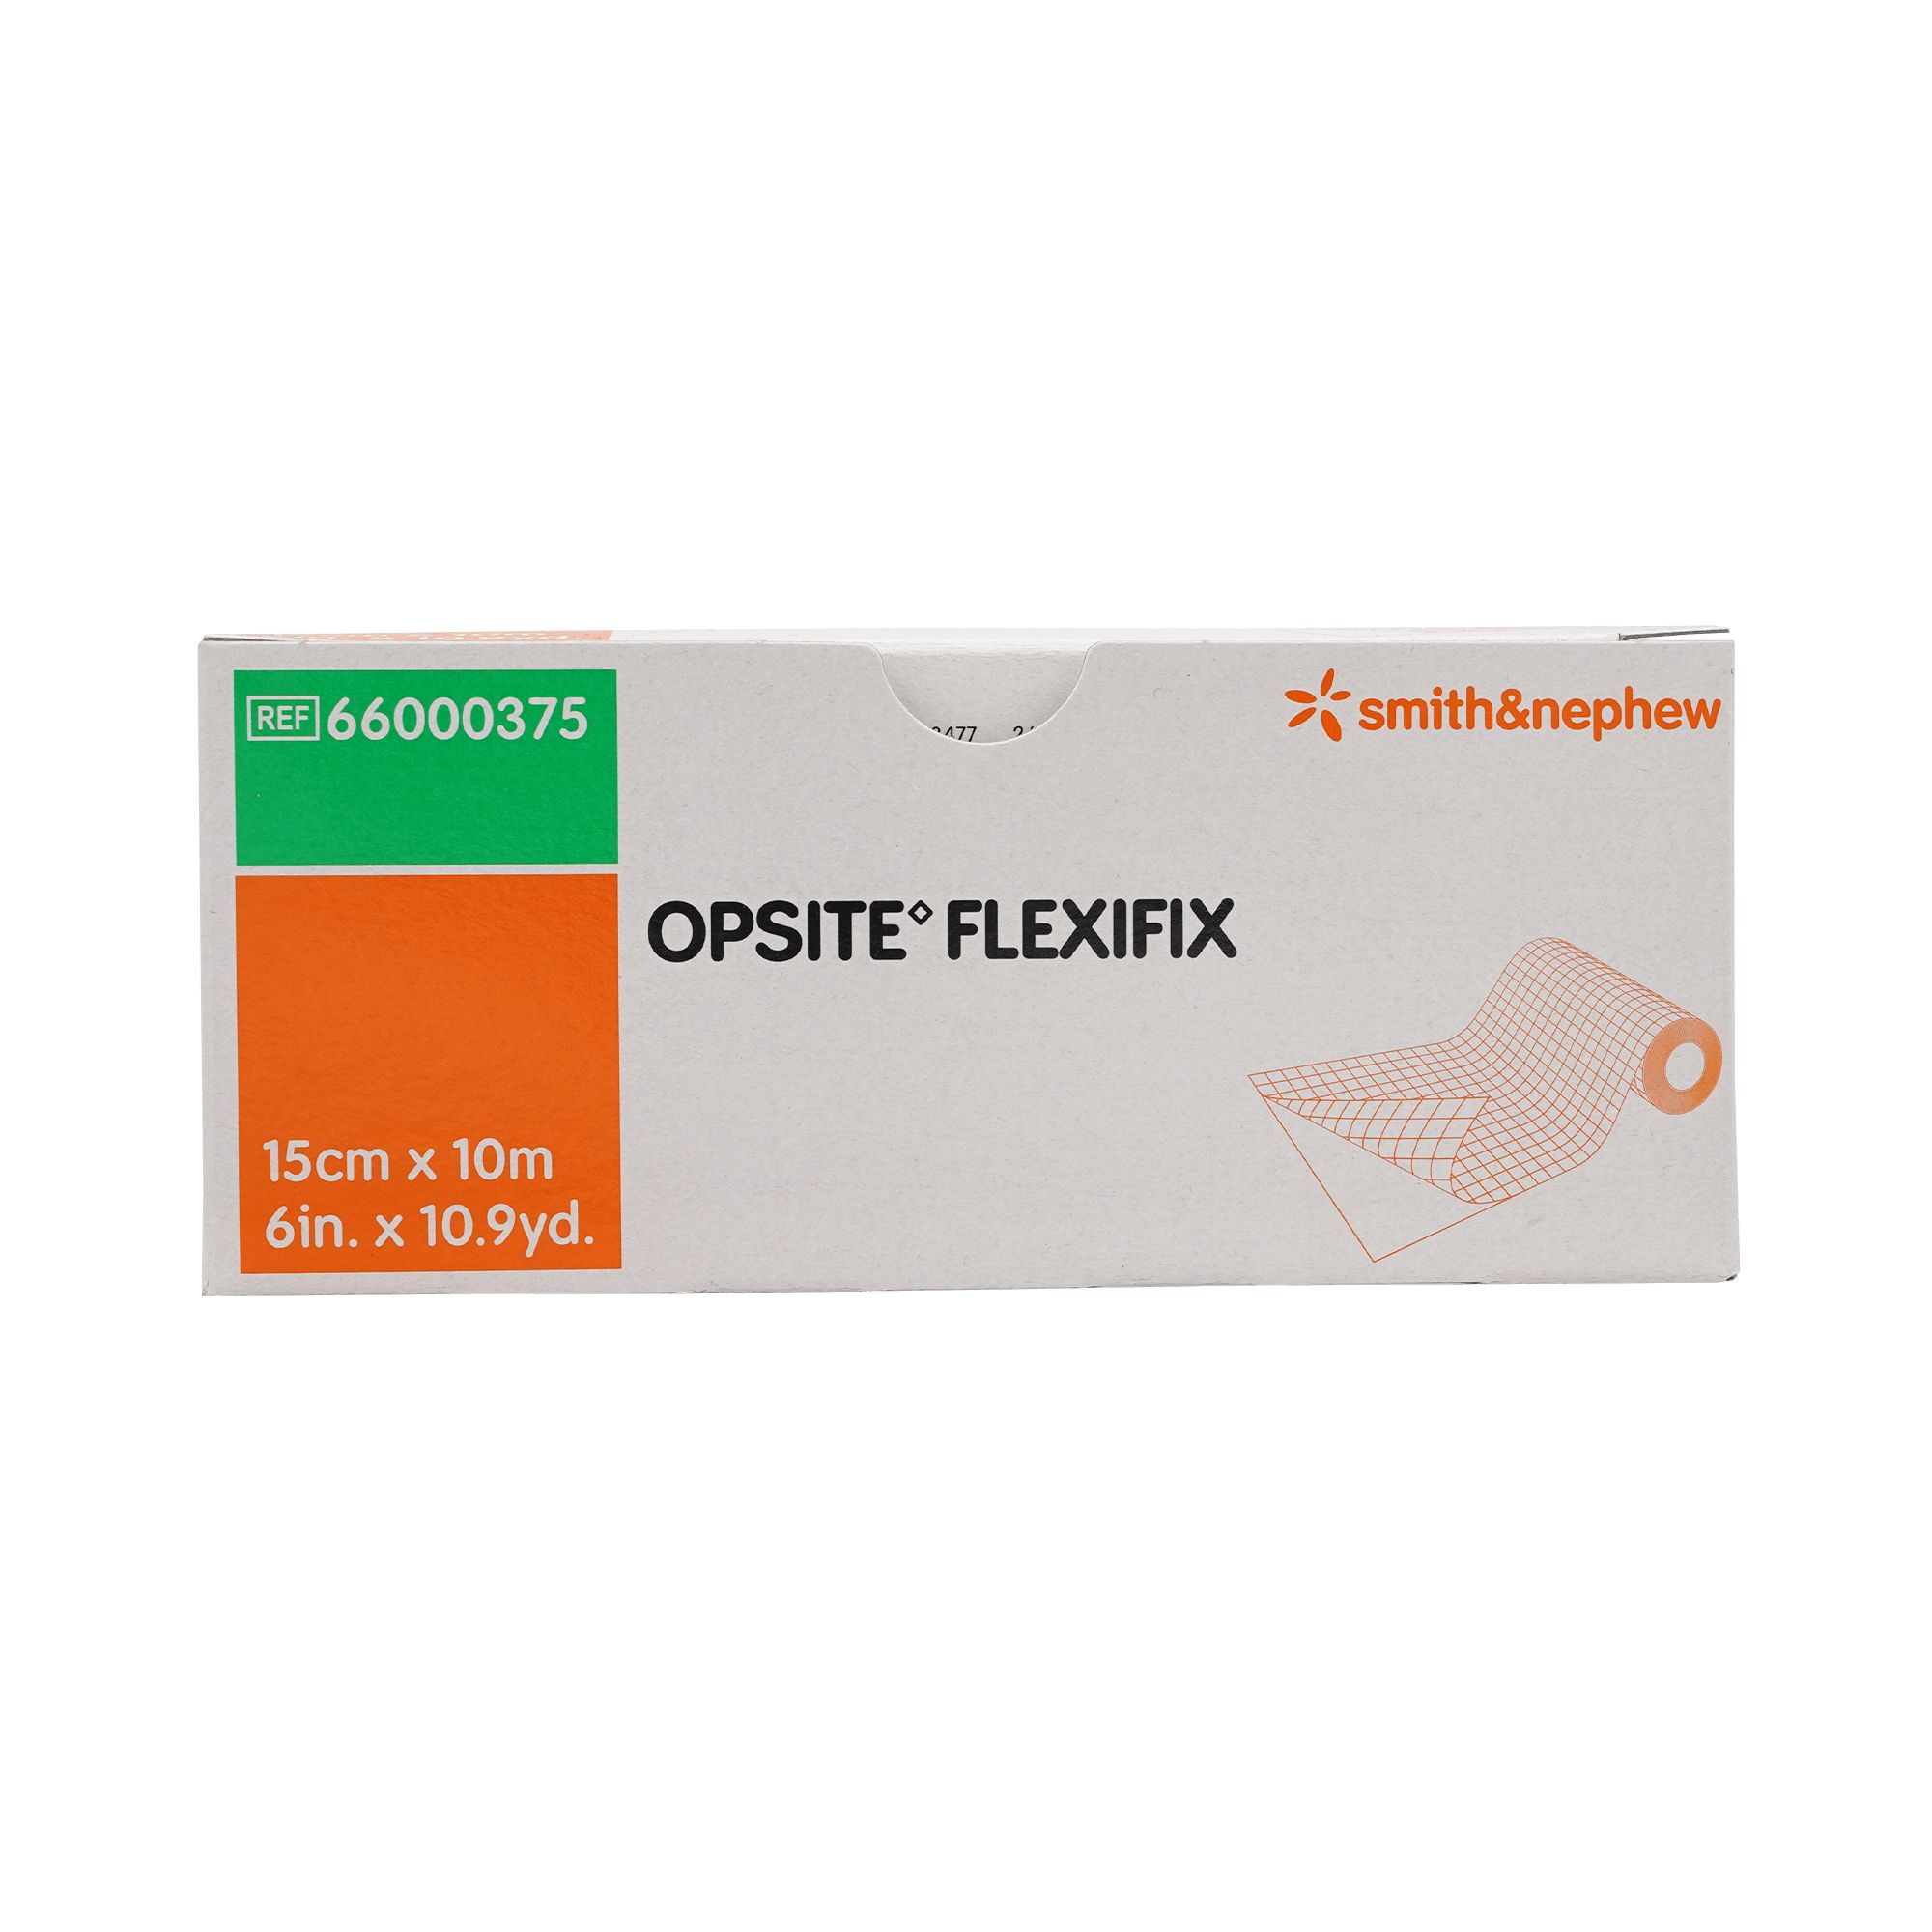 Opsite Flexifix Pu Folie 15cmx10m unsteril